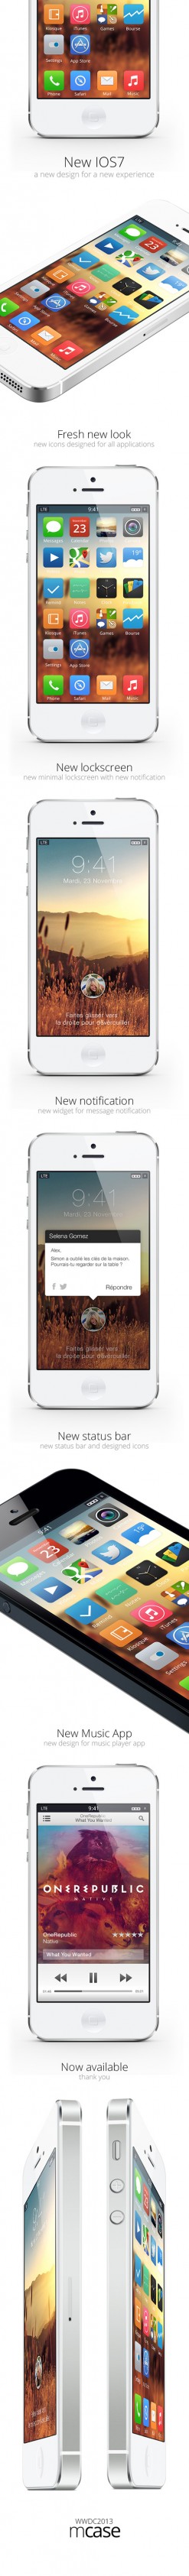 New-iOS7-Concept